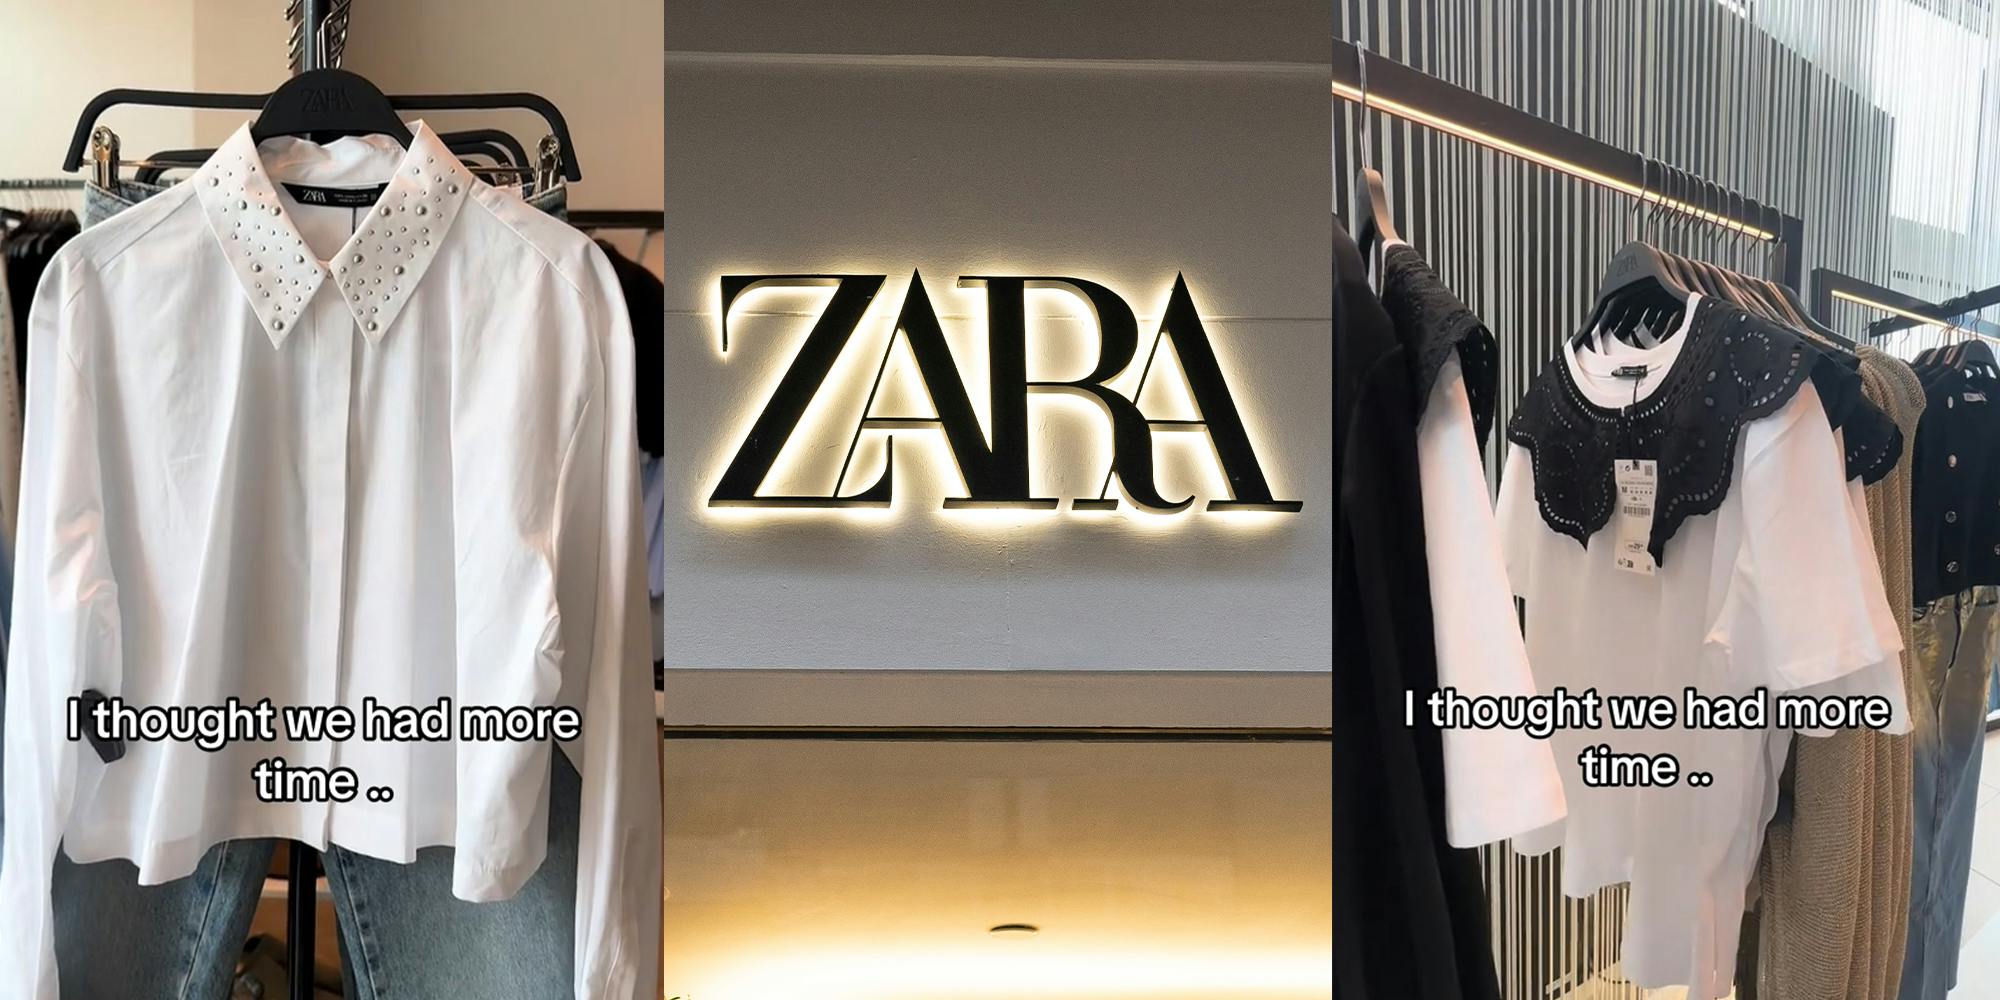 2012 Fashion is Making a Comeback at Zara